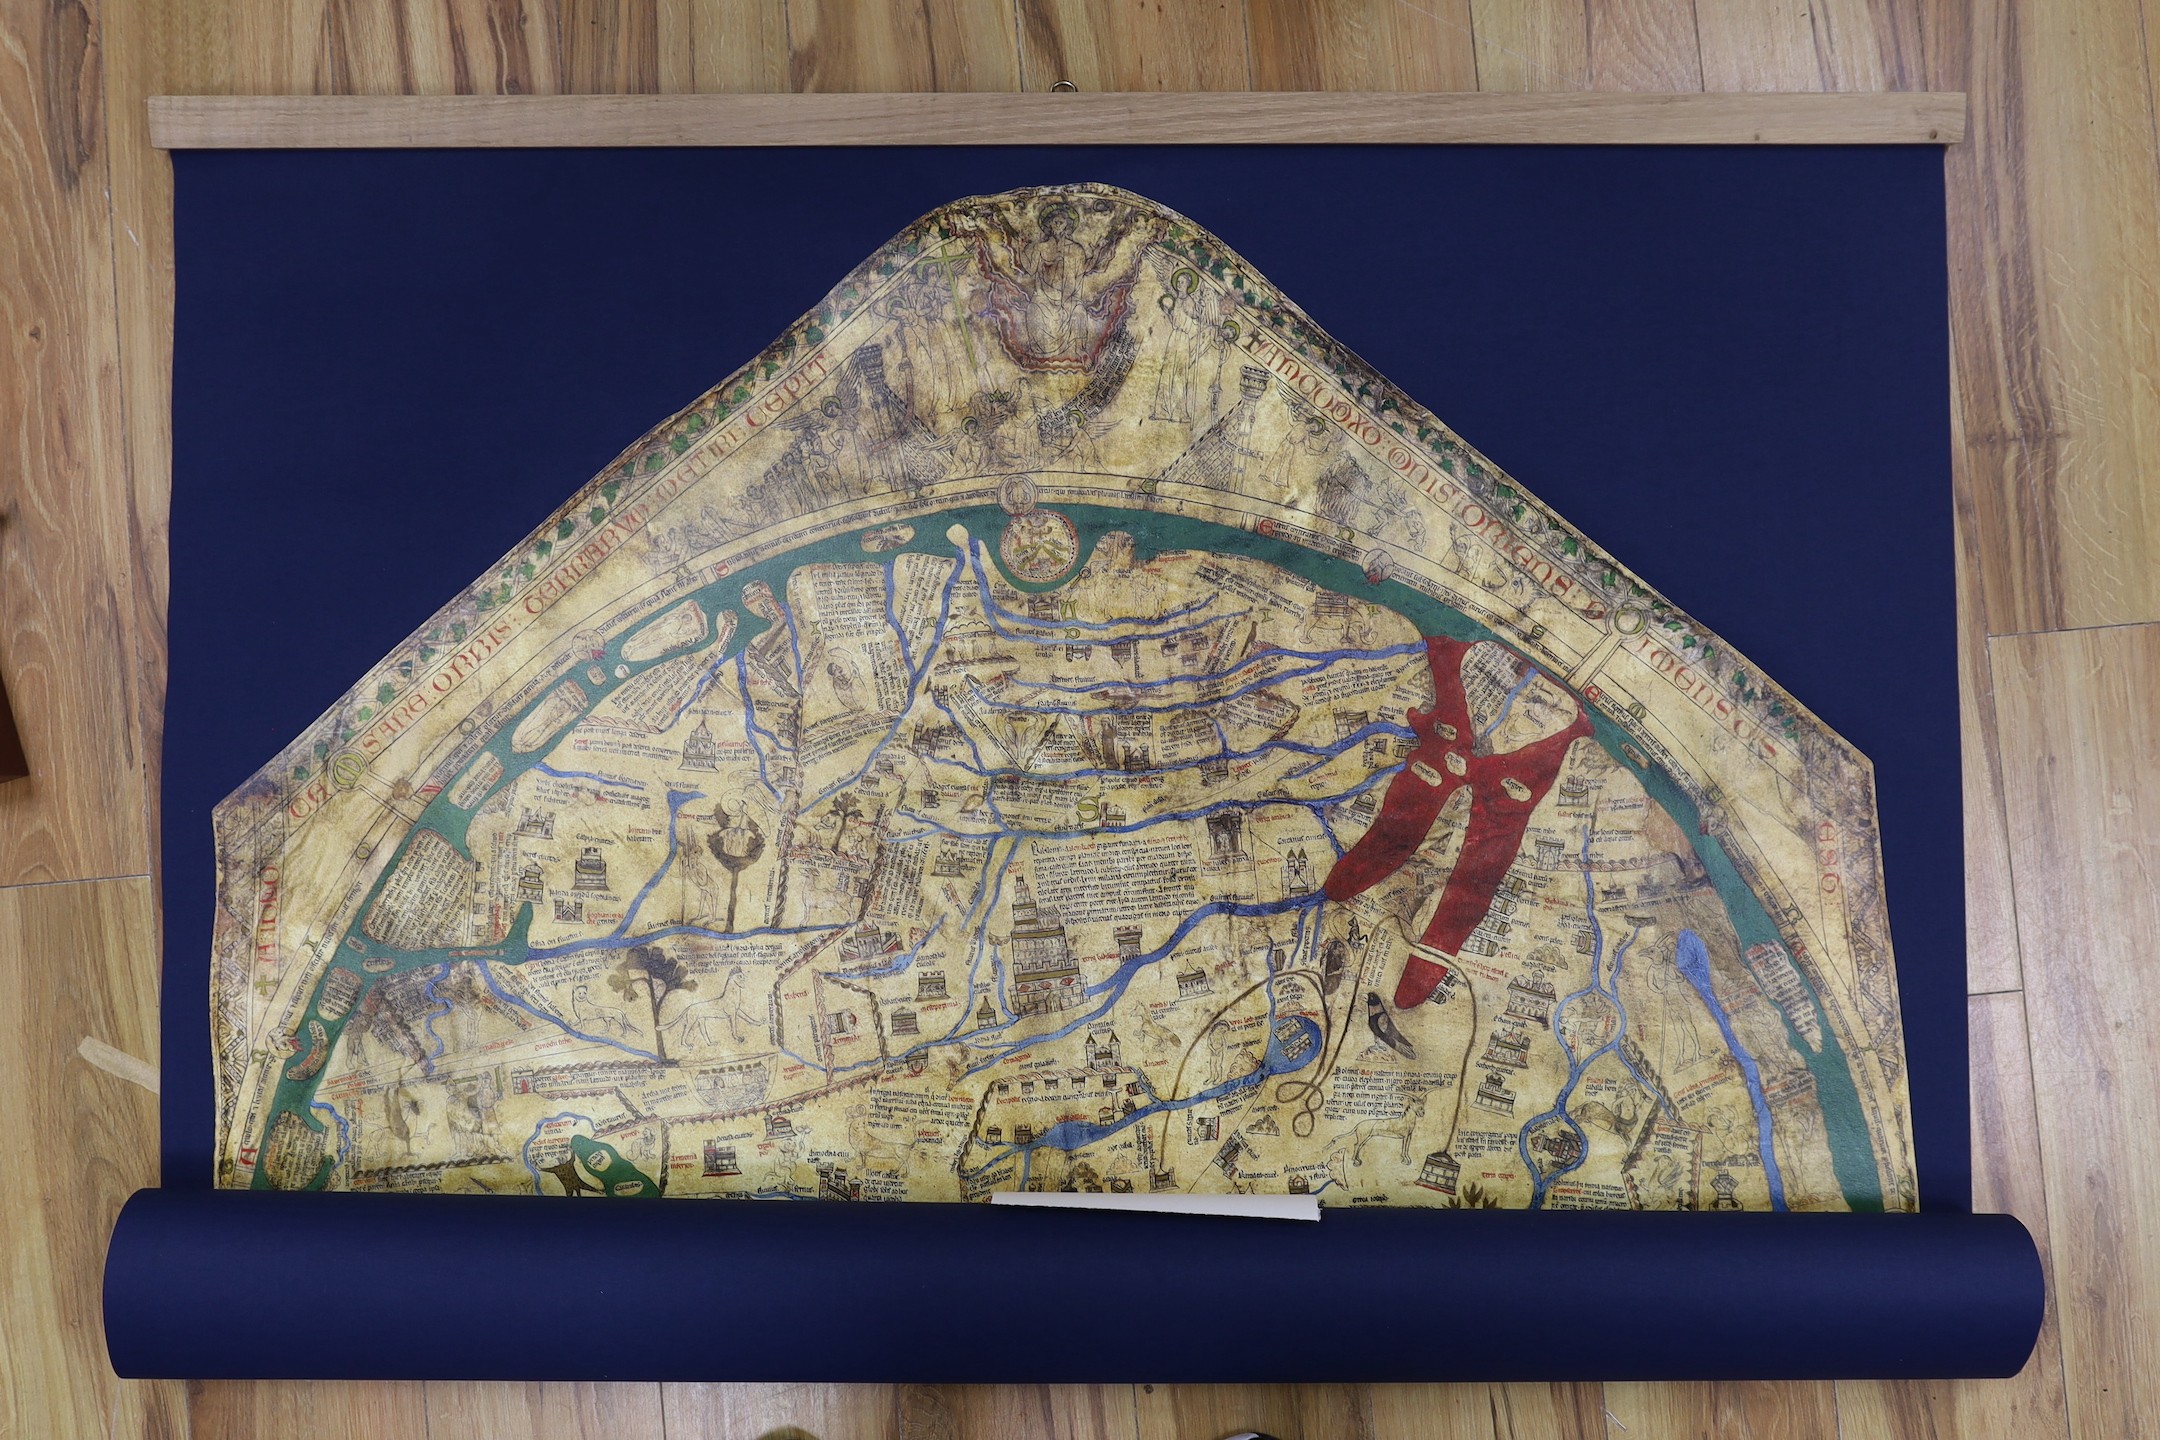 Mappa Mundi - The Hereford World Map